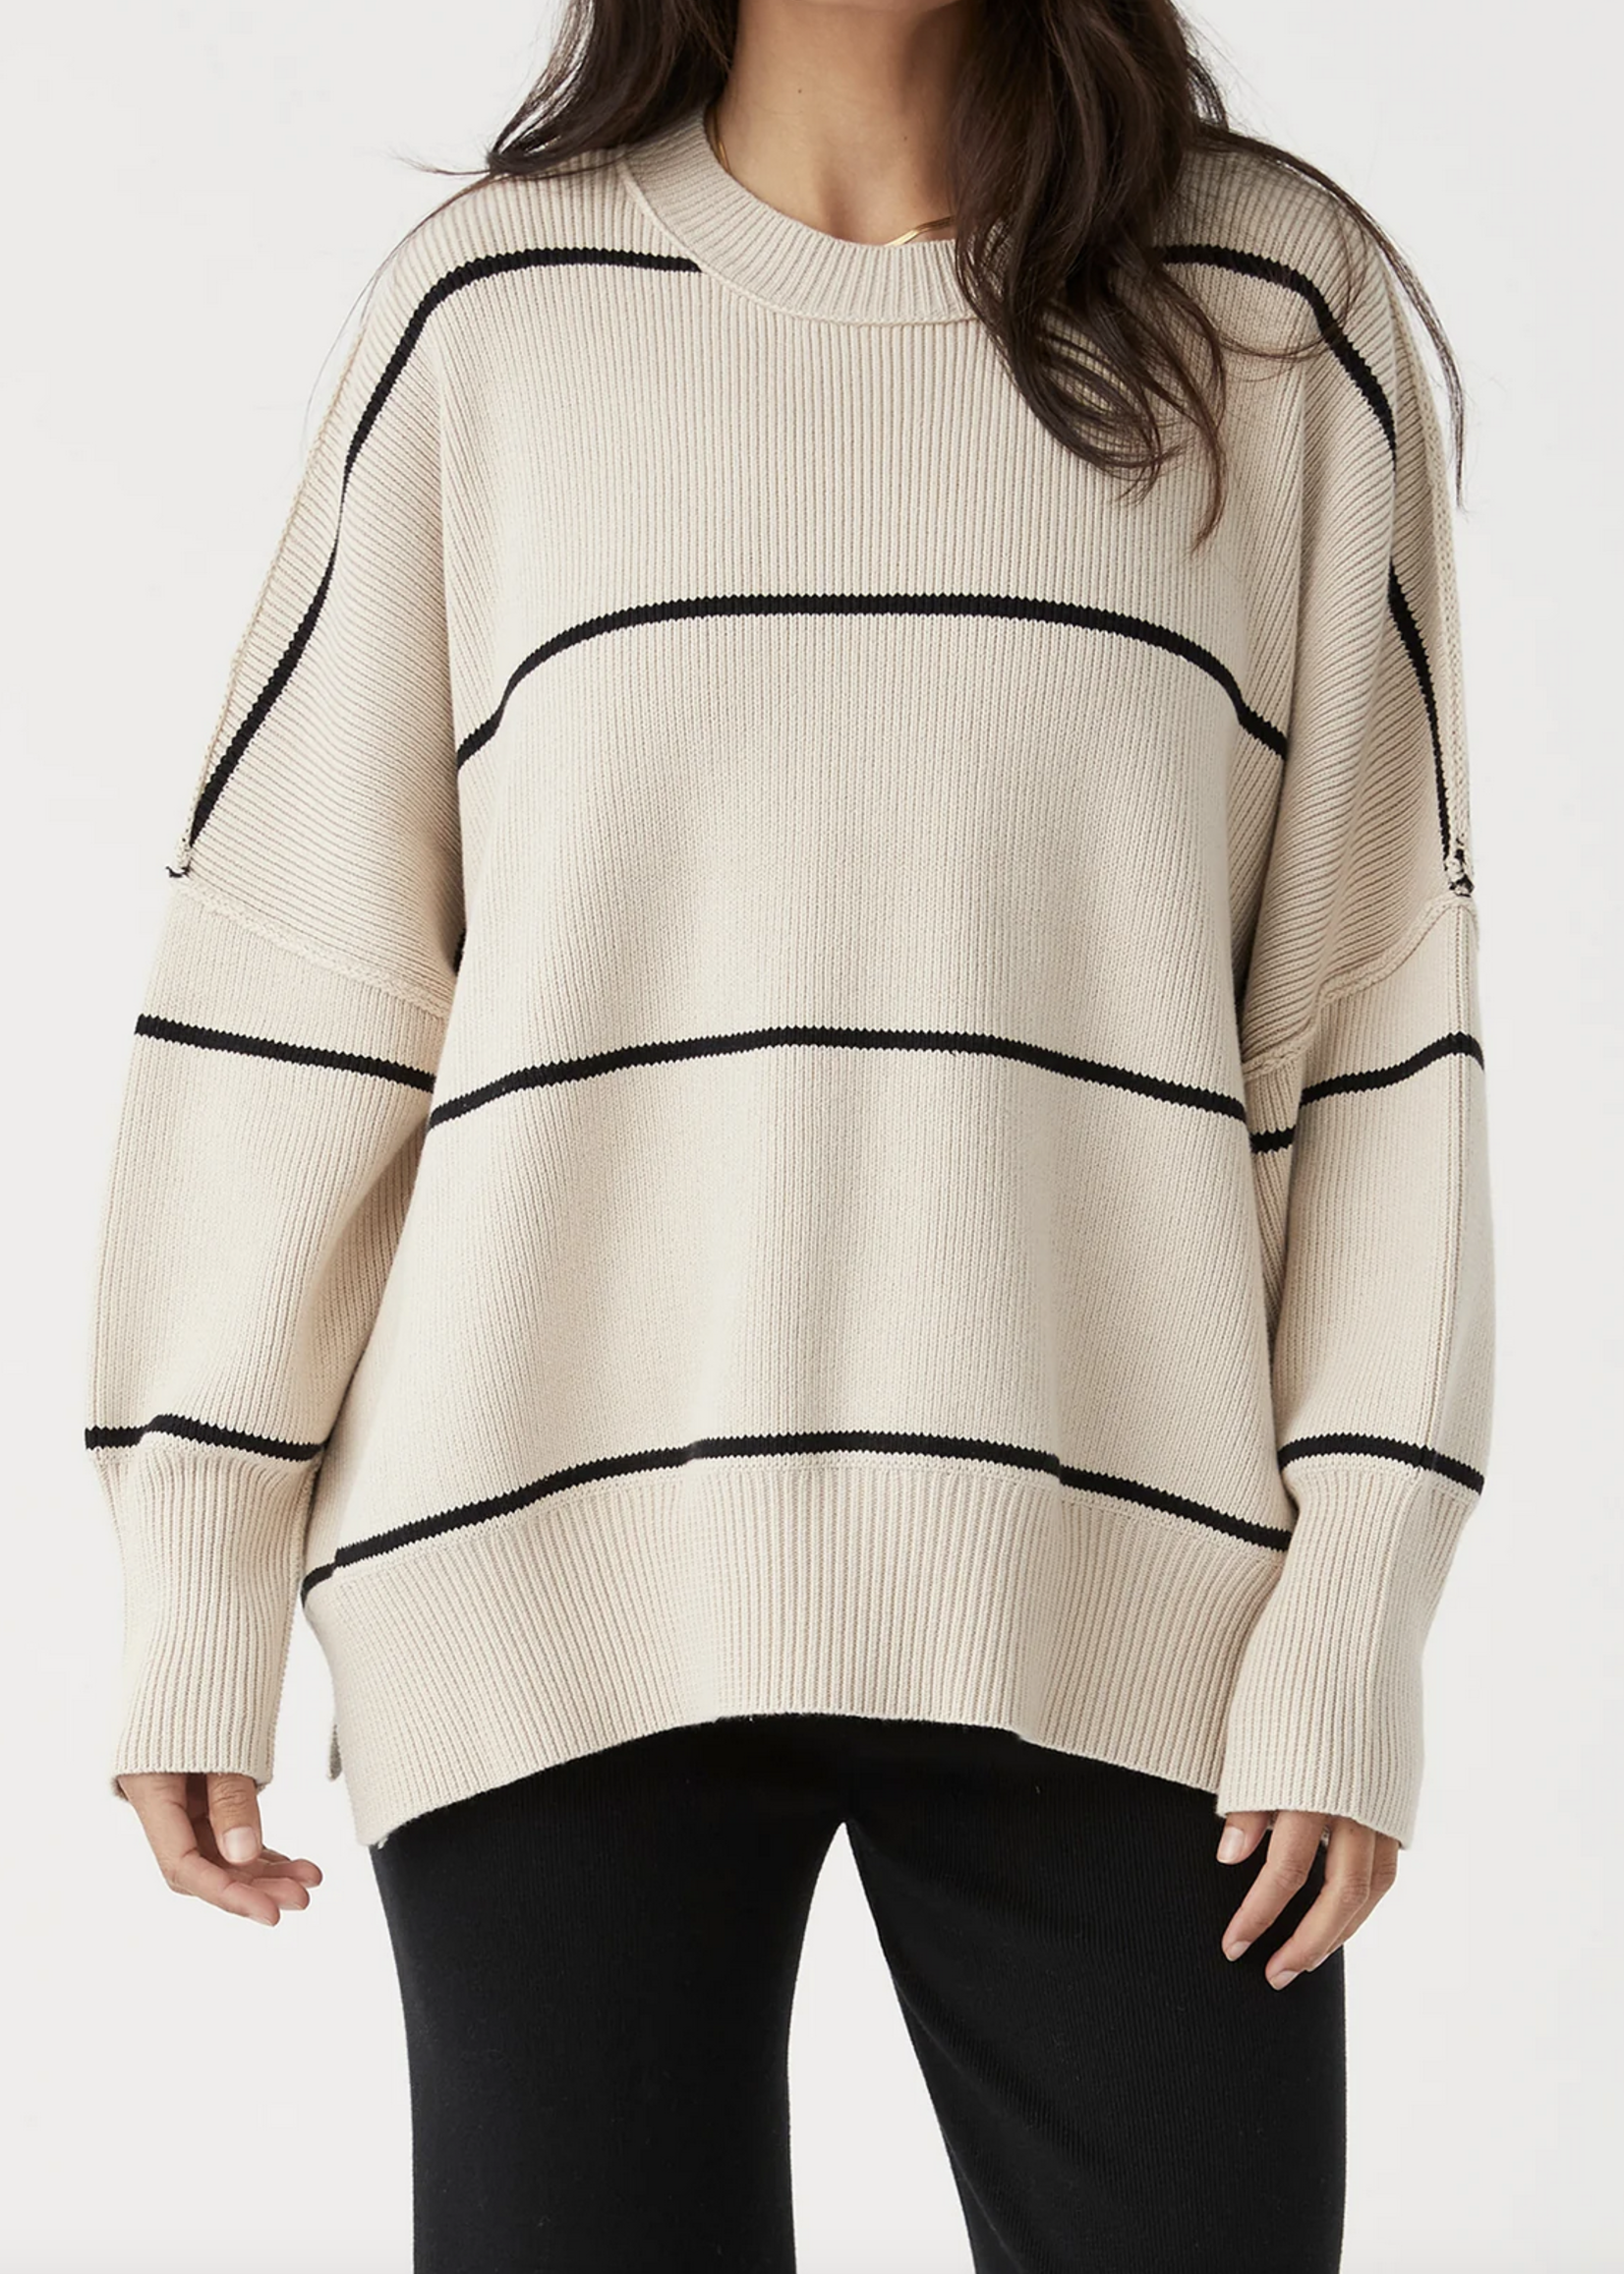 ARCAA Harper Stripe Sweater